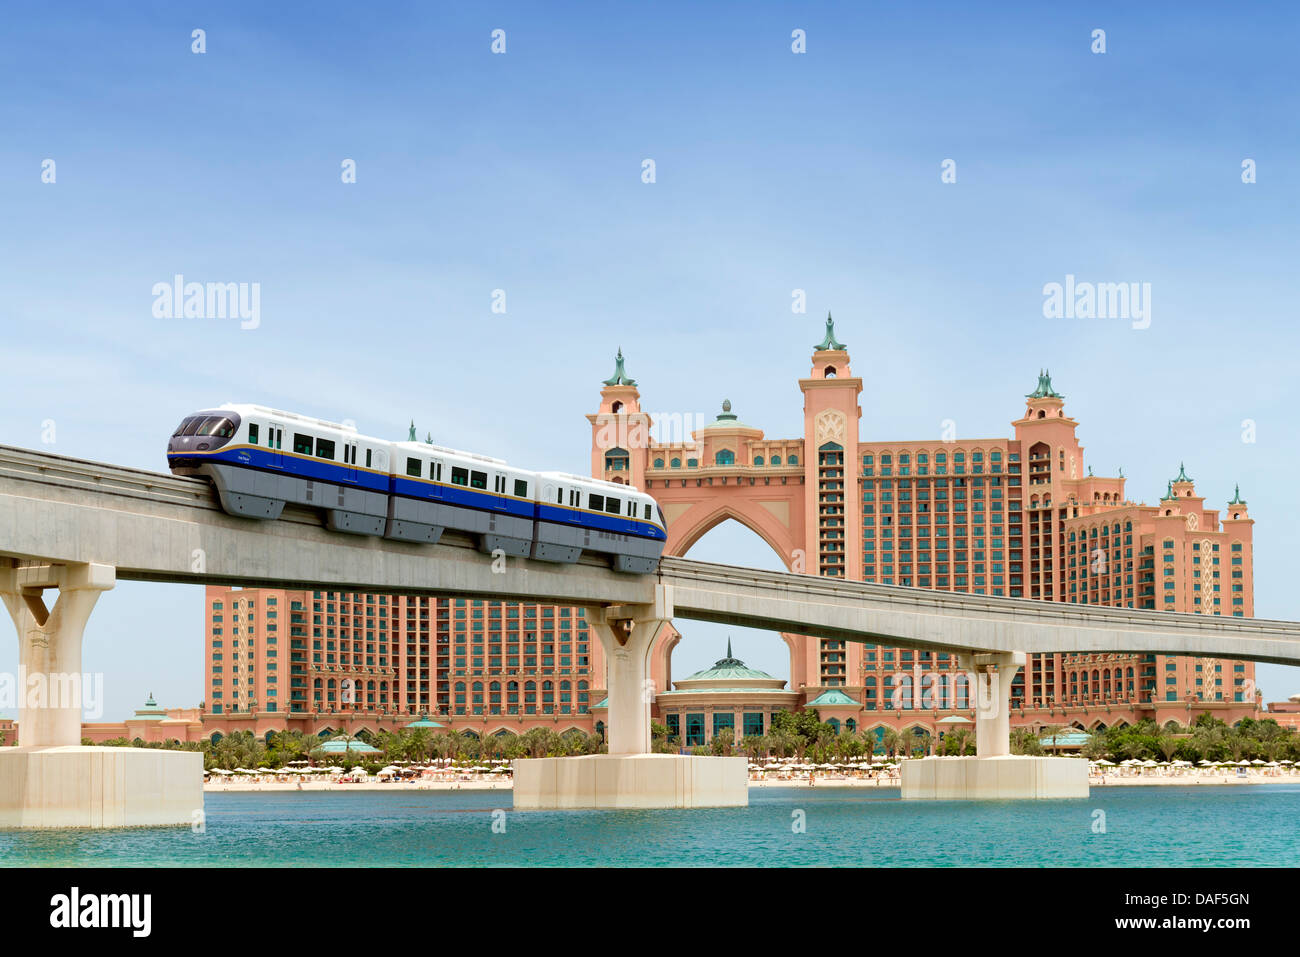 Monorail train approaching The Palm Atlantis luxury hotel on artificial Palm Jumeirah island in Dubai United Arab Emirates Stock Photo